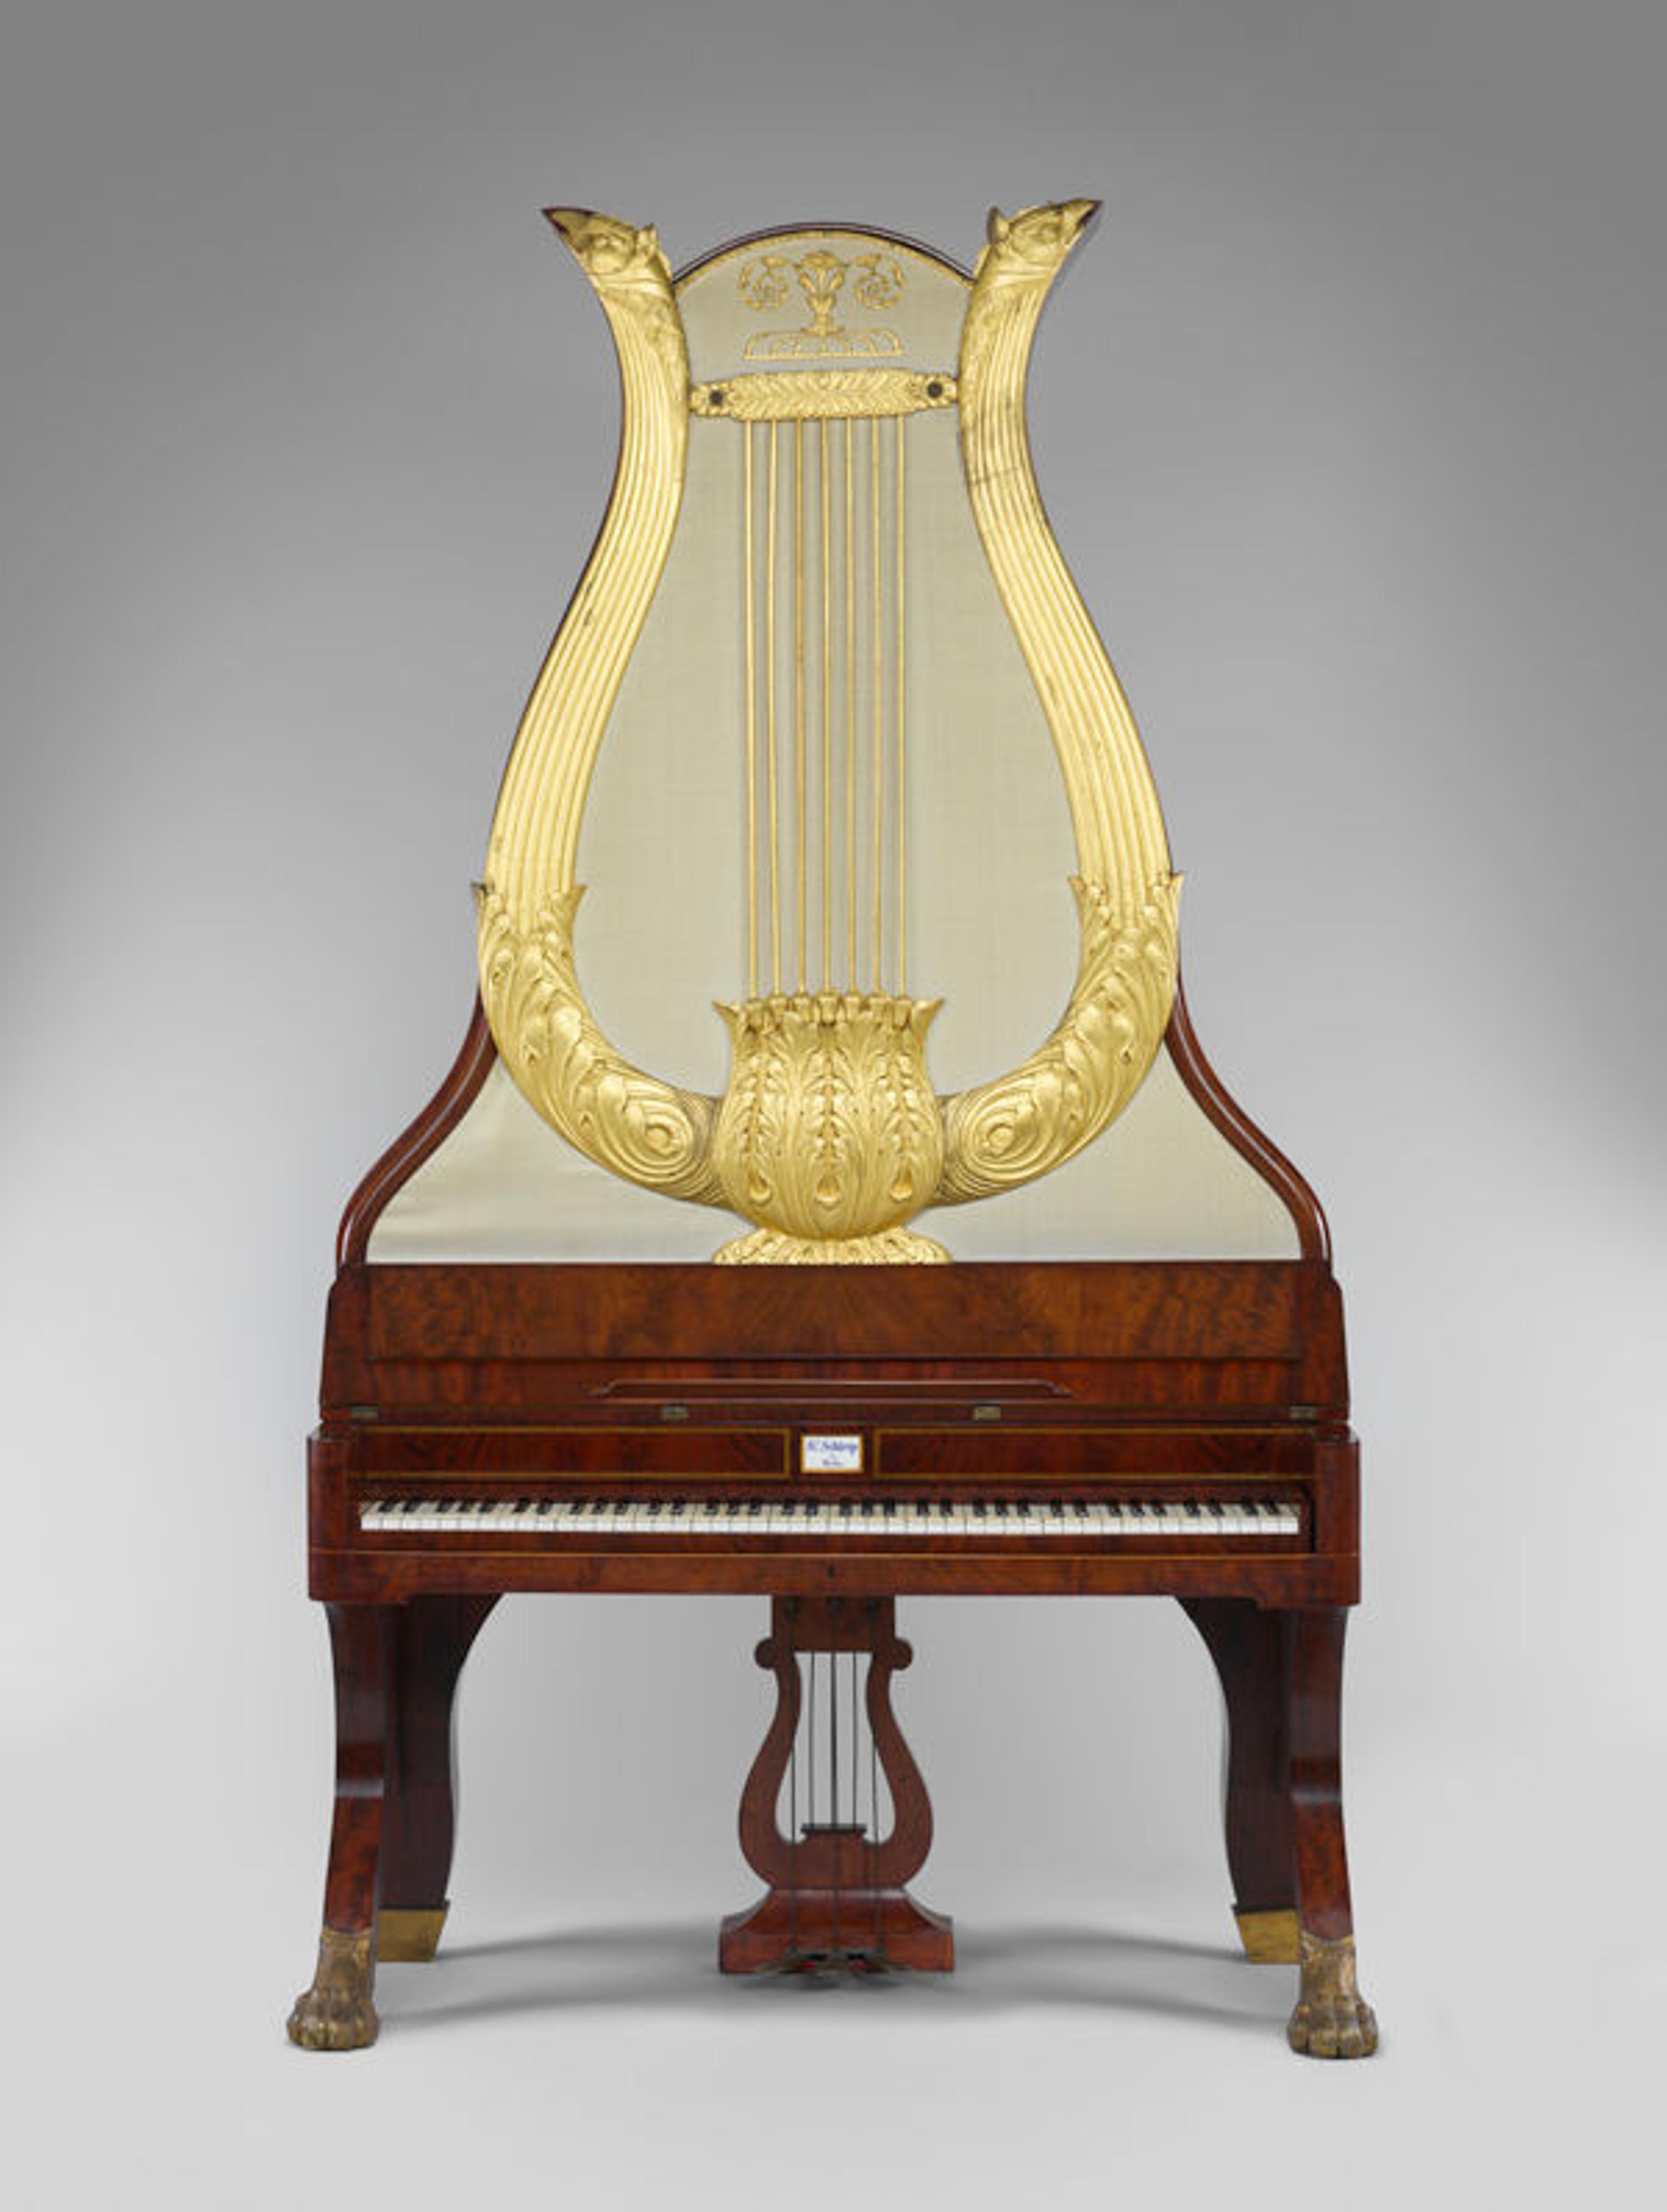 Johann Christian Schleip (1786–1848). Lyraflügel, ca. 1820–44. Wood, silk, gilt, ivory. The Metropolitan Museum of Art, New York, Gift of Mr. and Mrs. Theodore R. Sayers, 1968 (68.47)